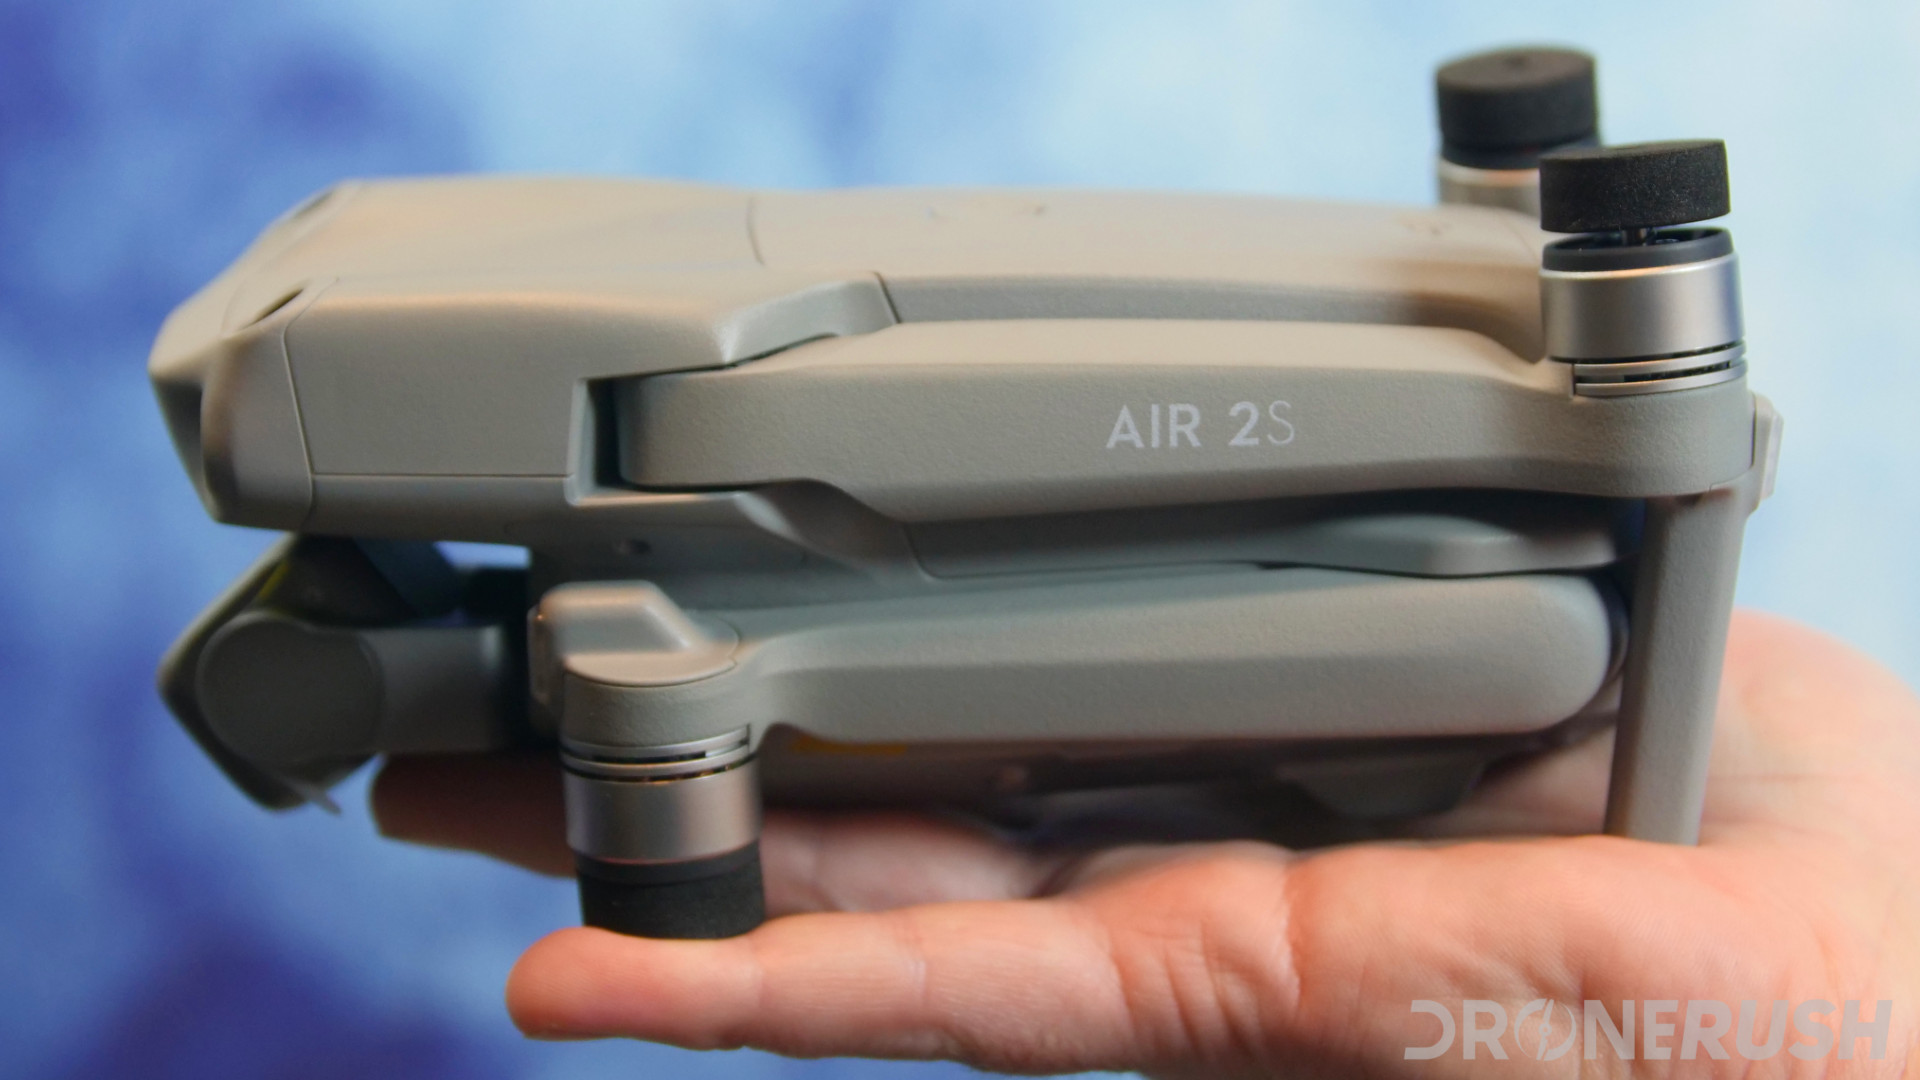 DJI Air 2S - Drone Rush